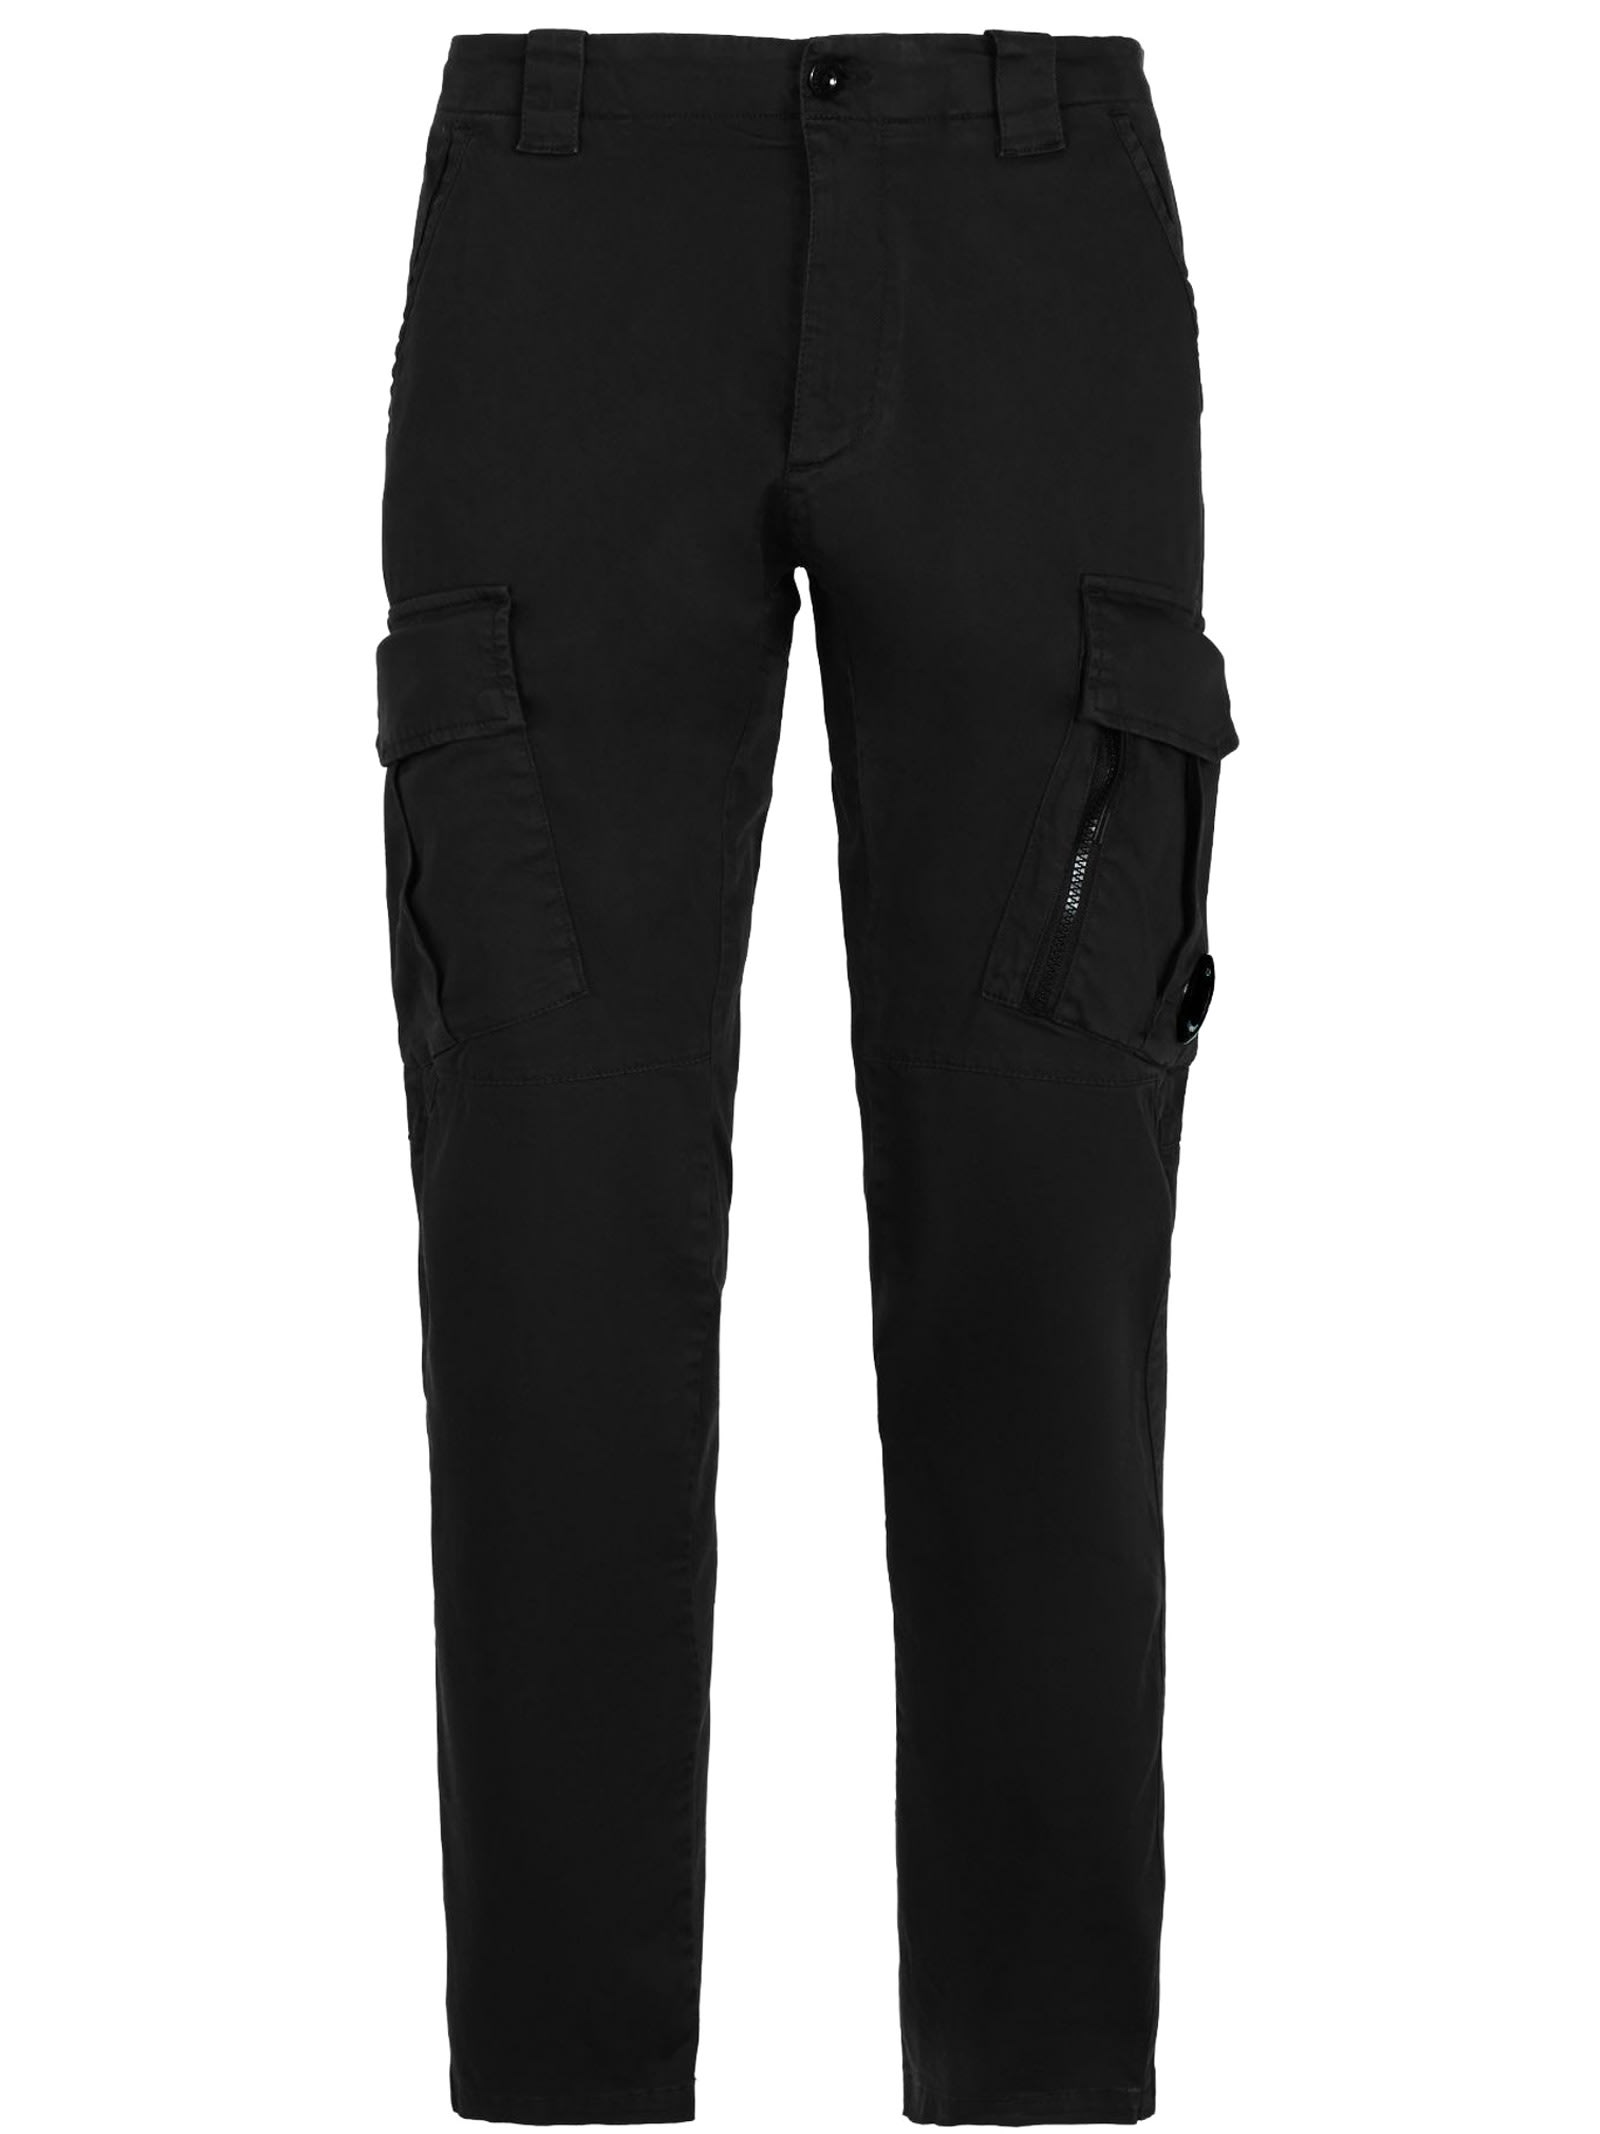 C.P. Company Black Stretch Sateen Regular Fit Cargo Pants